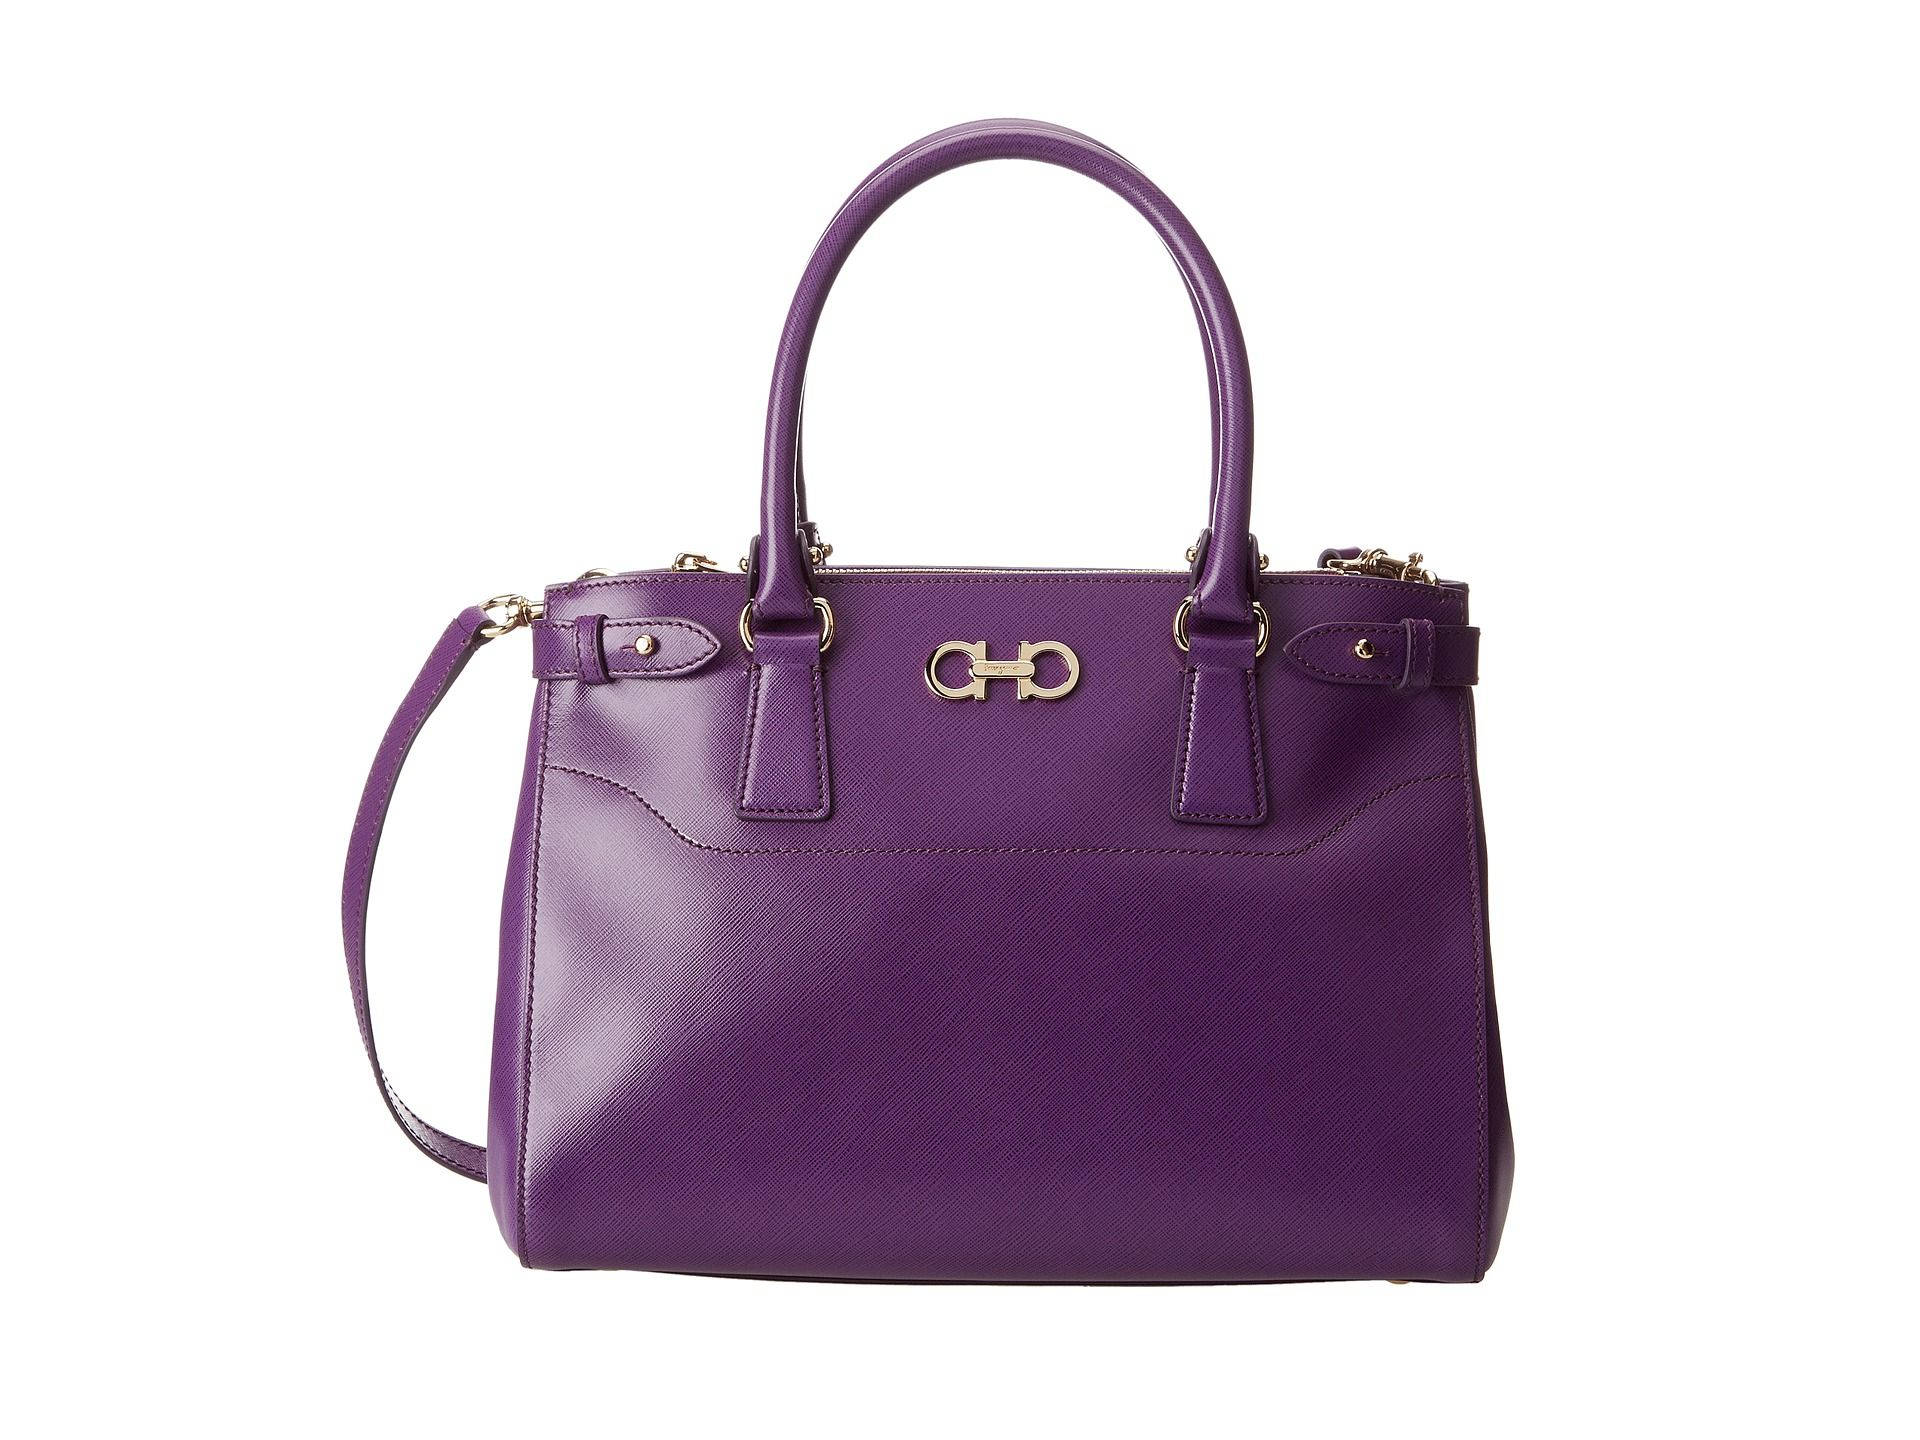 Salvatore Ferragamo Purple Handbag Wallpaper